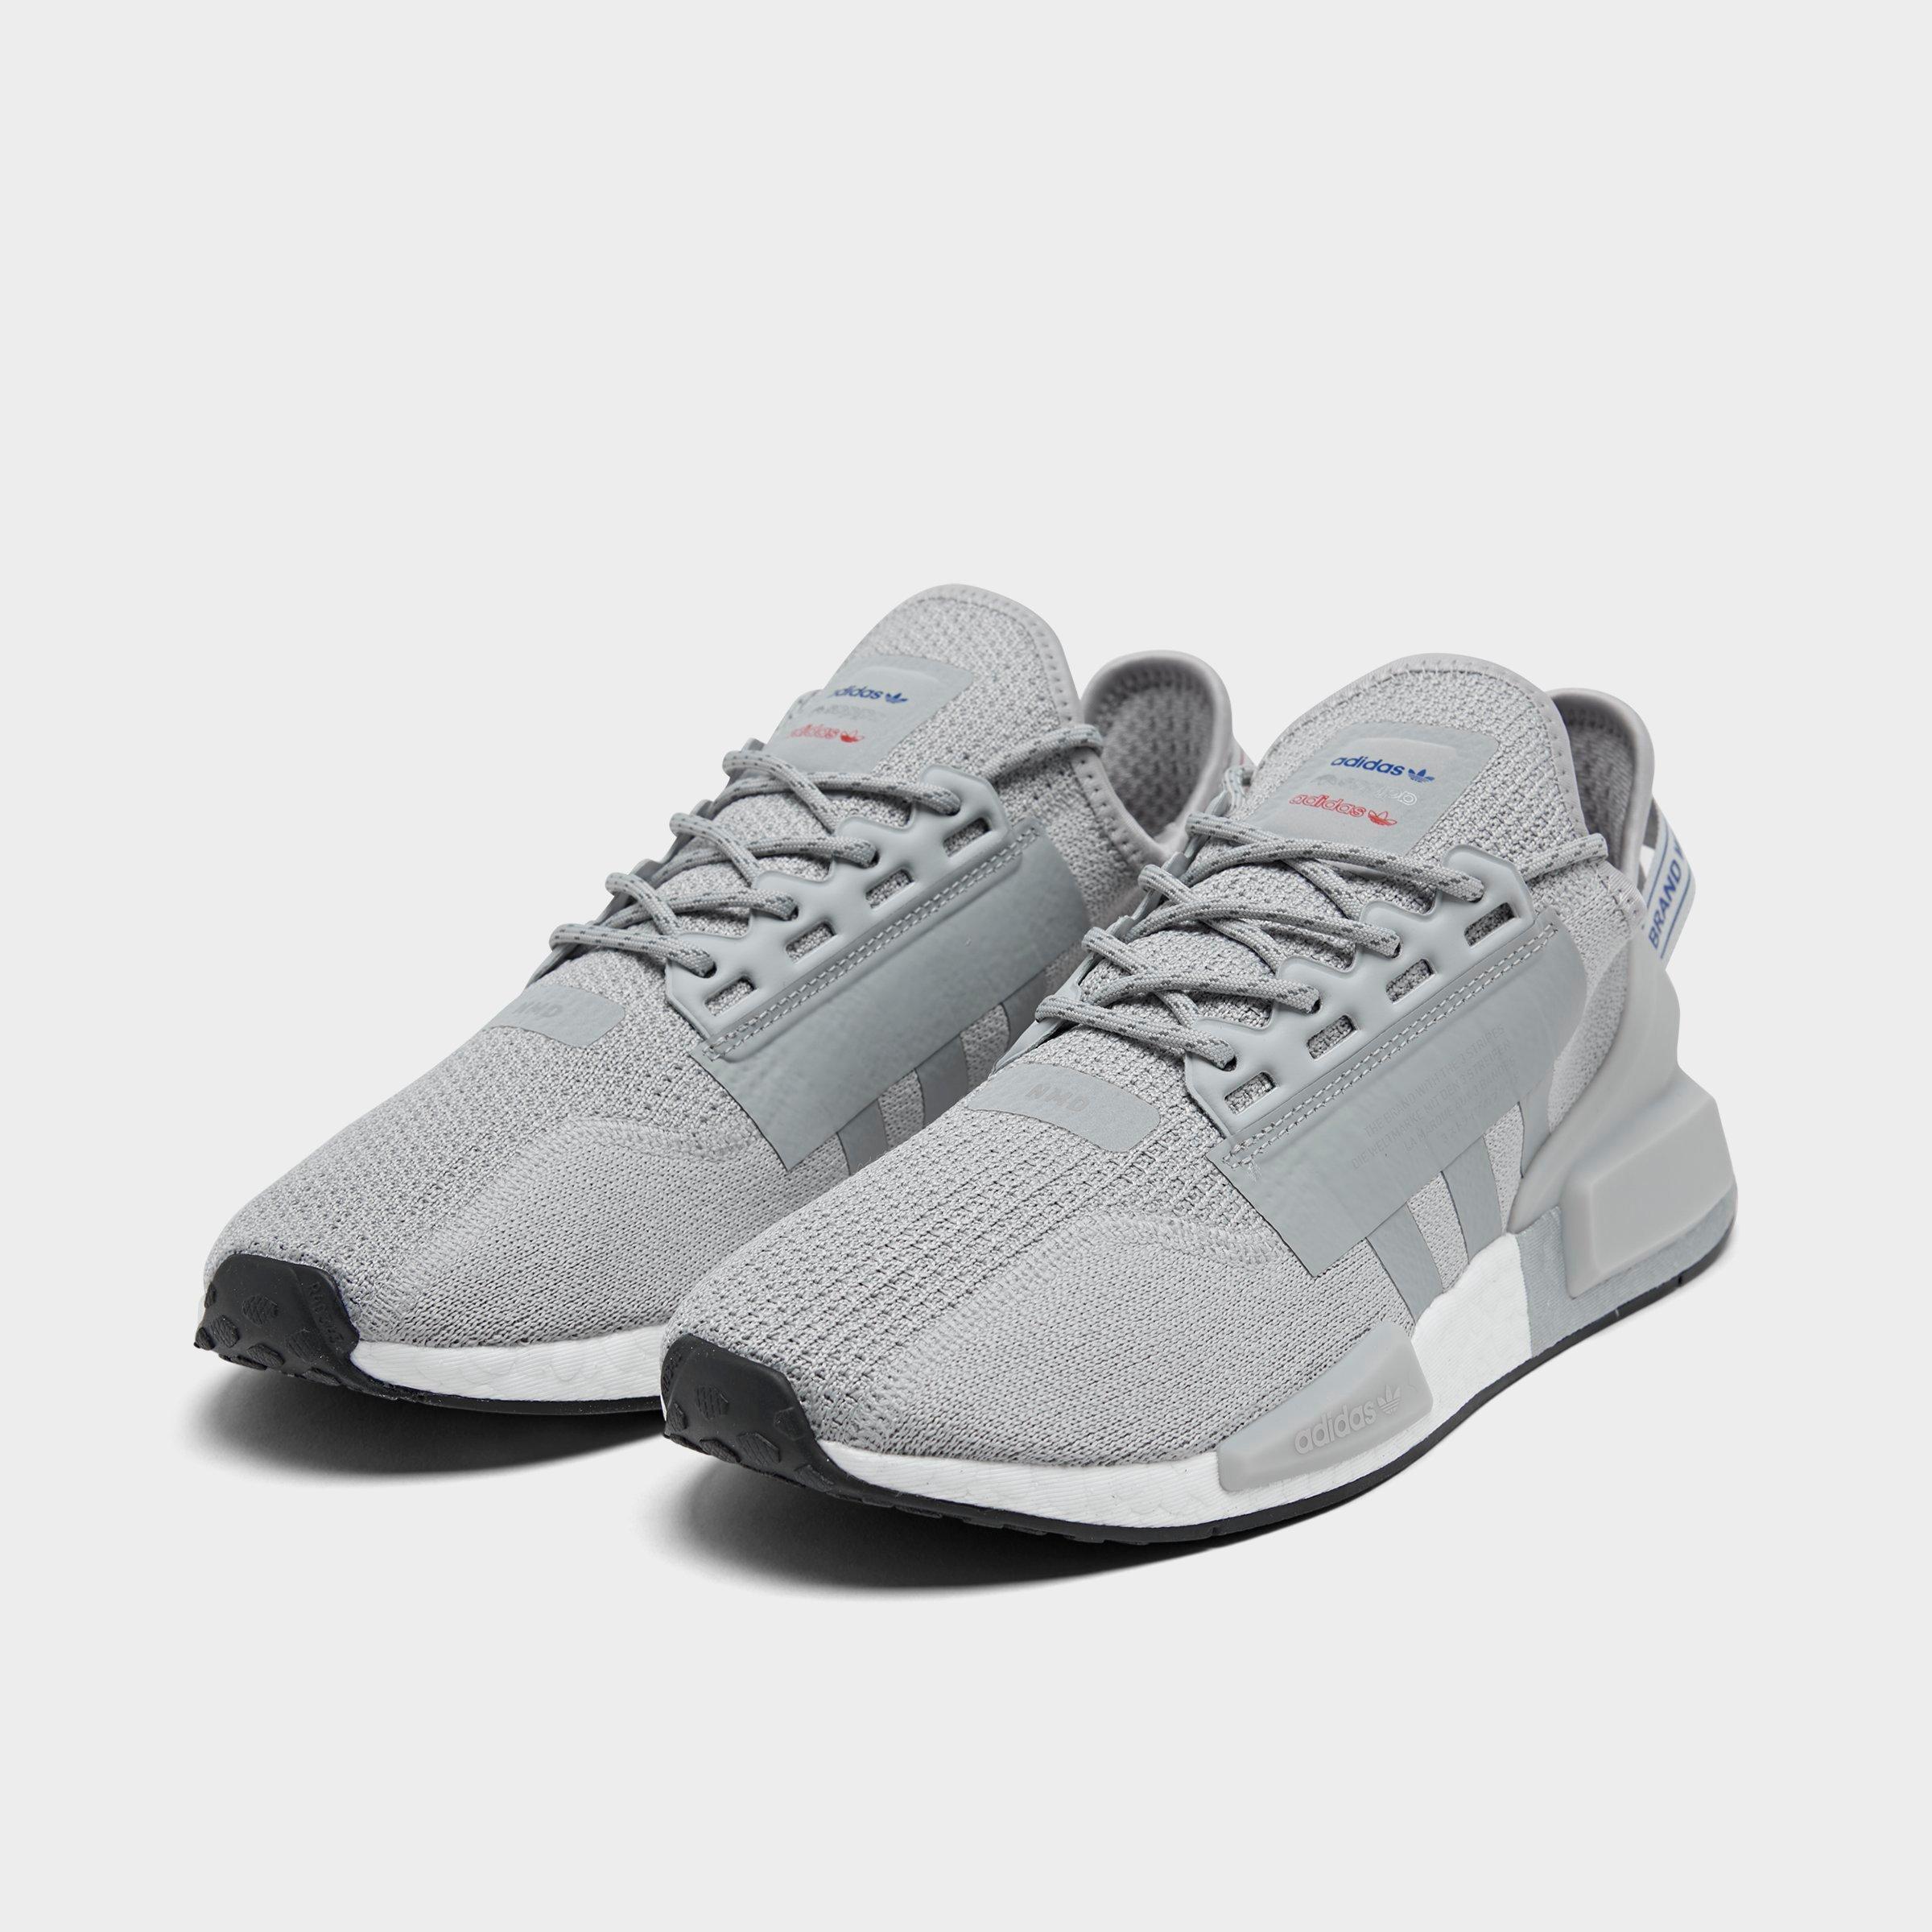 Adidas originals nmd r1 stlt pk running shoes gray white